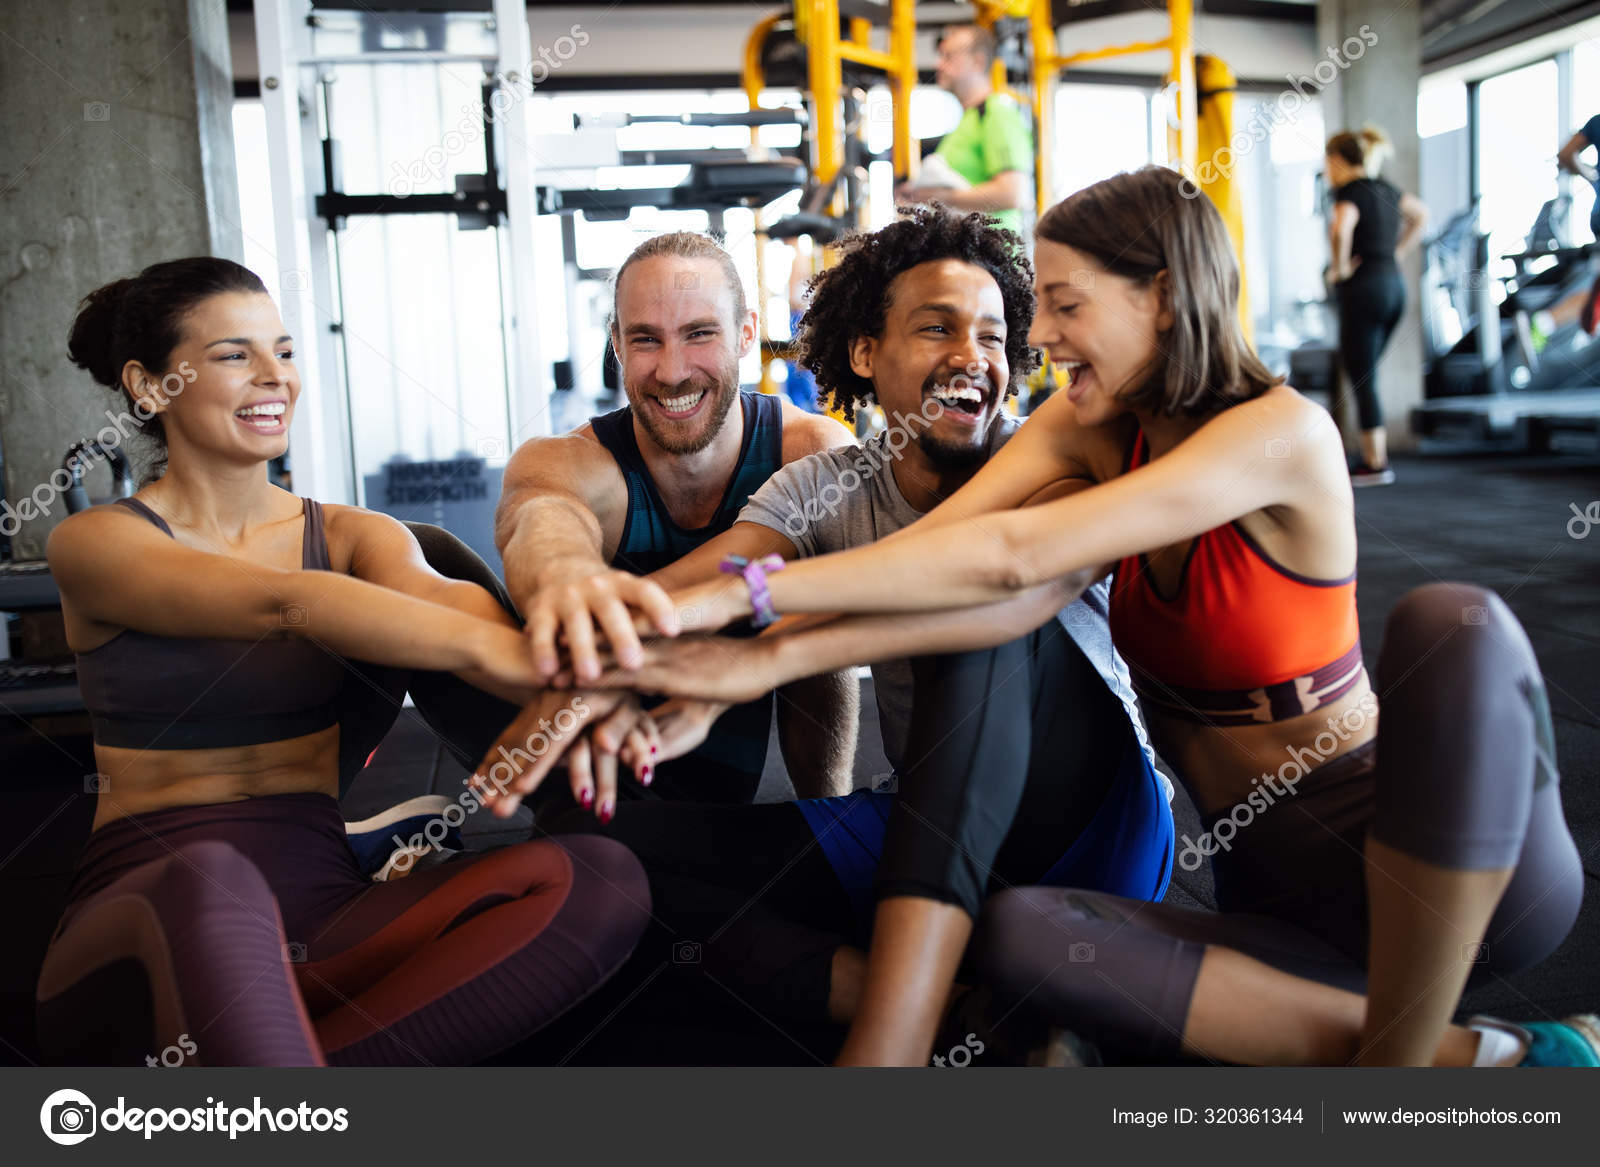 https://st3.depositphotos.com/5392356/32036/i/1600/depositphotos_320361344-stock-photo-happy-fit-people-exercising-working.jpg